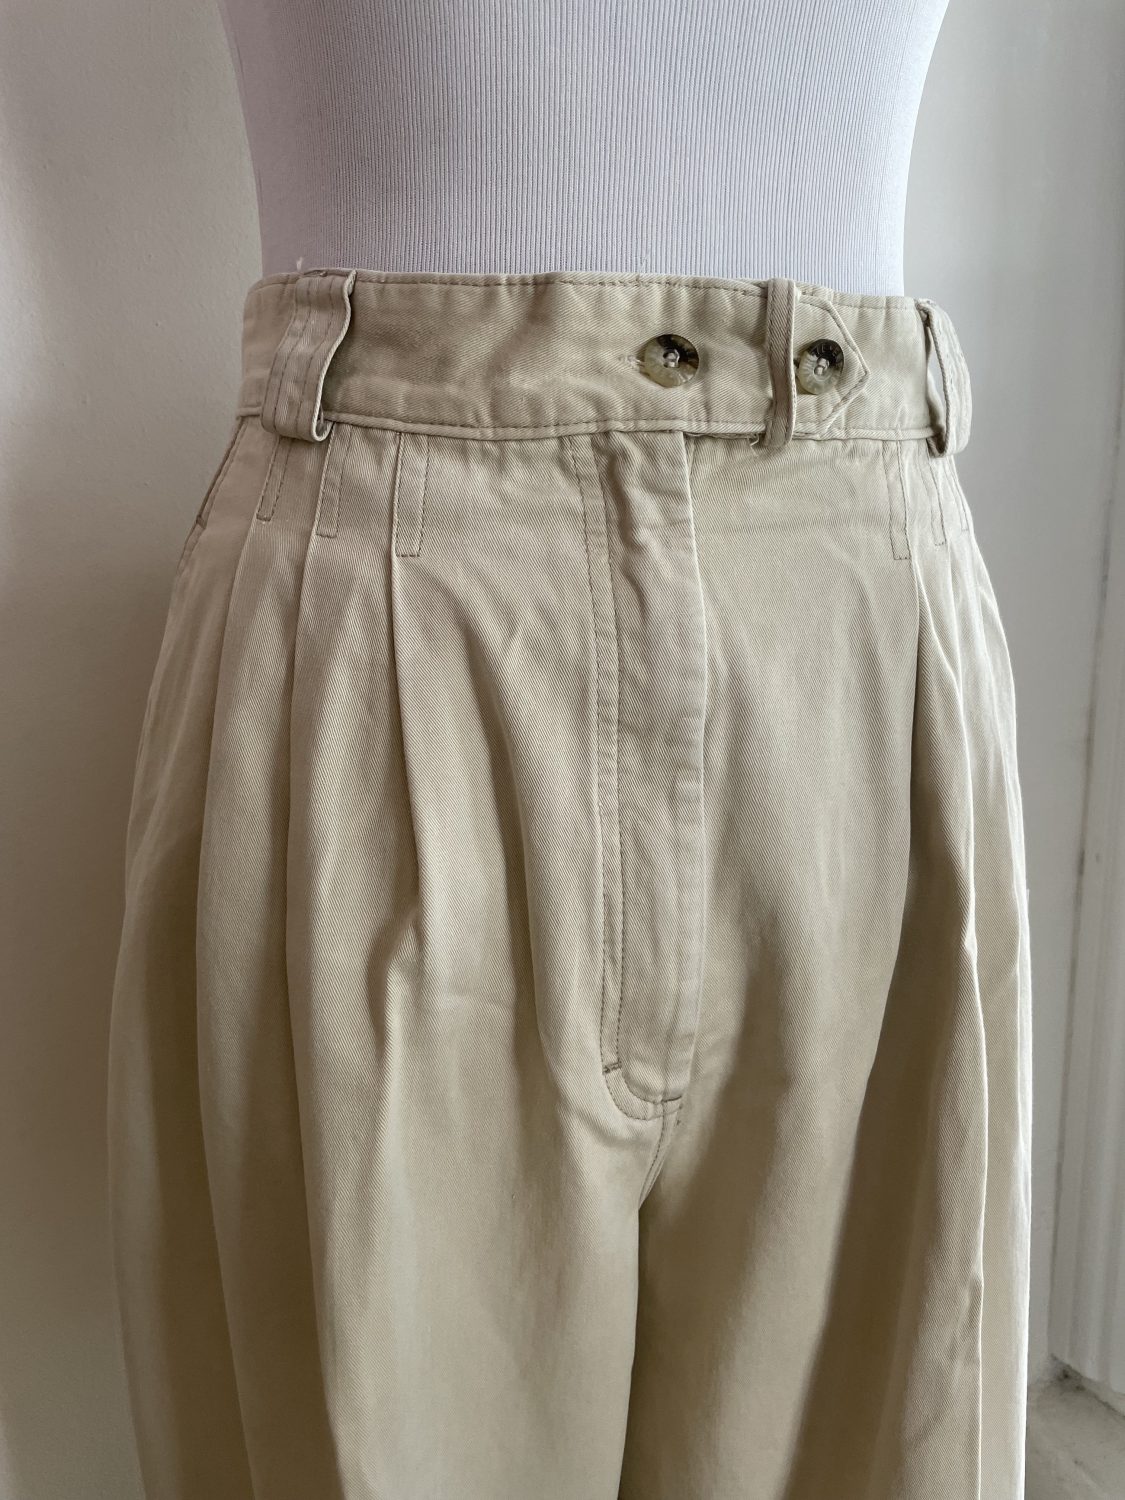 Cat & Jack (Target) Girls Khaki Brown Uniform Pants Size 10 Back to  School | eBay